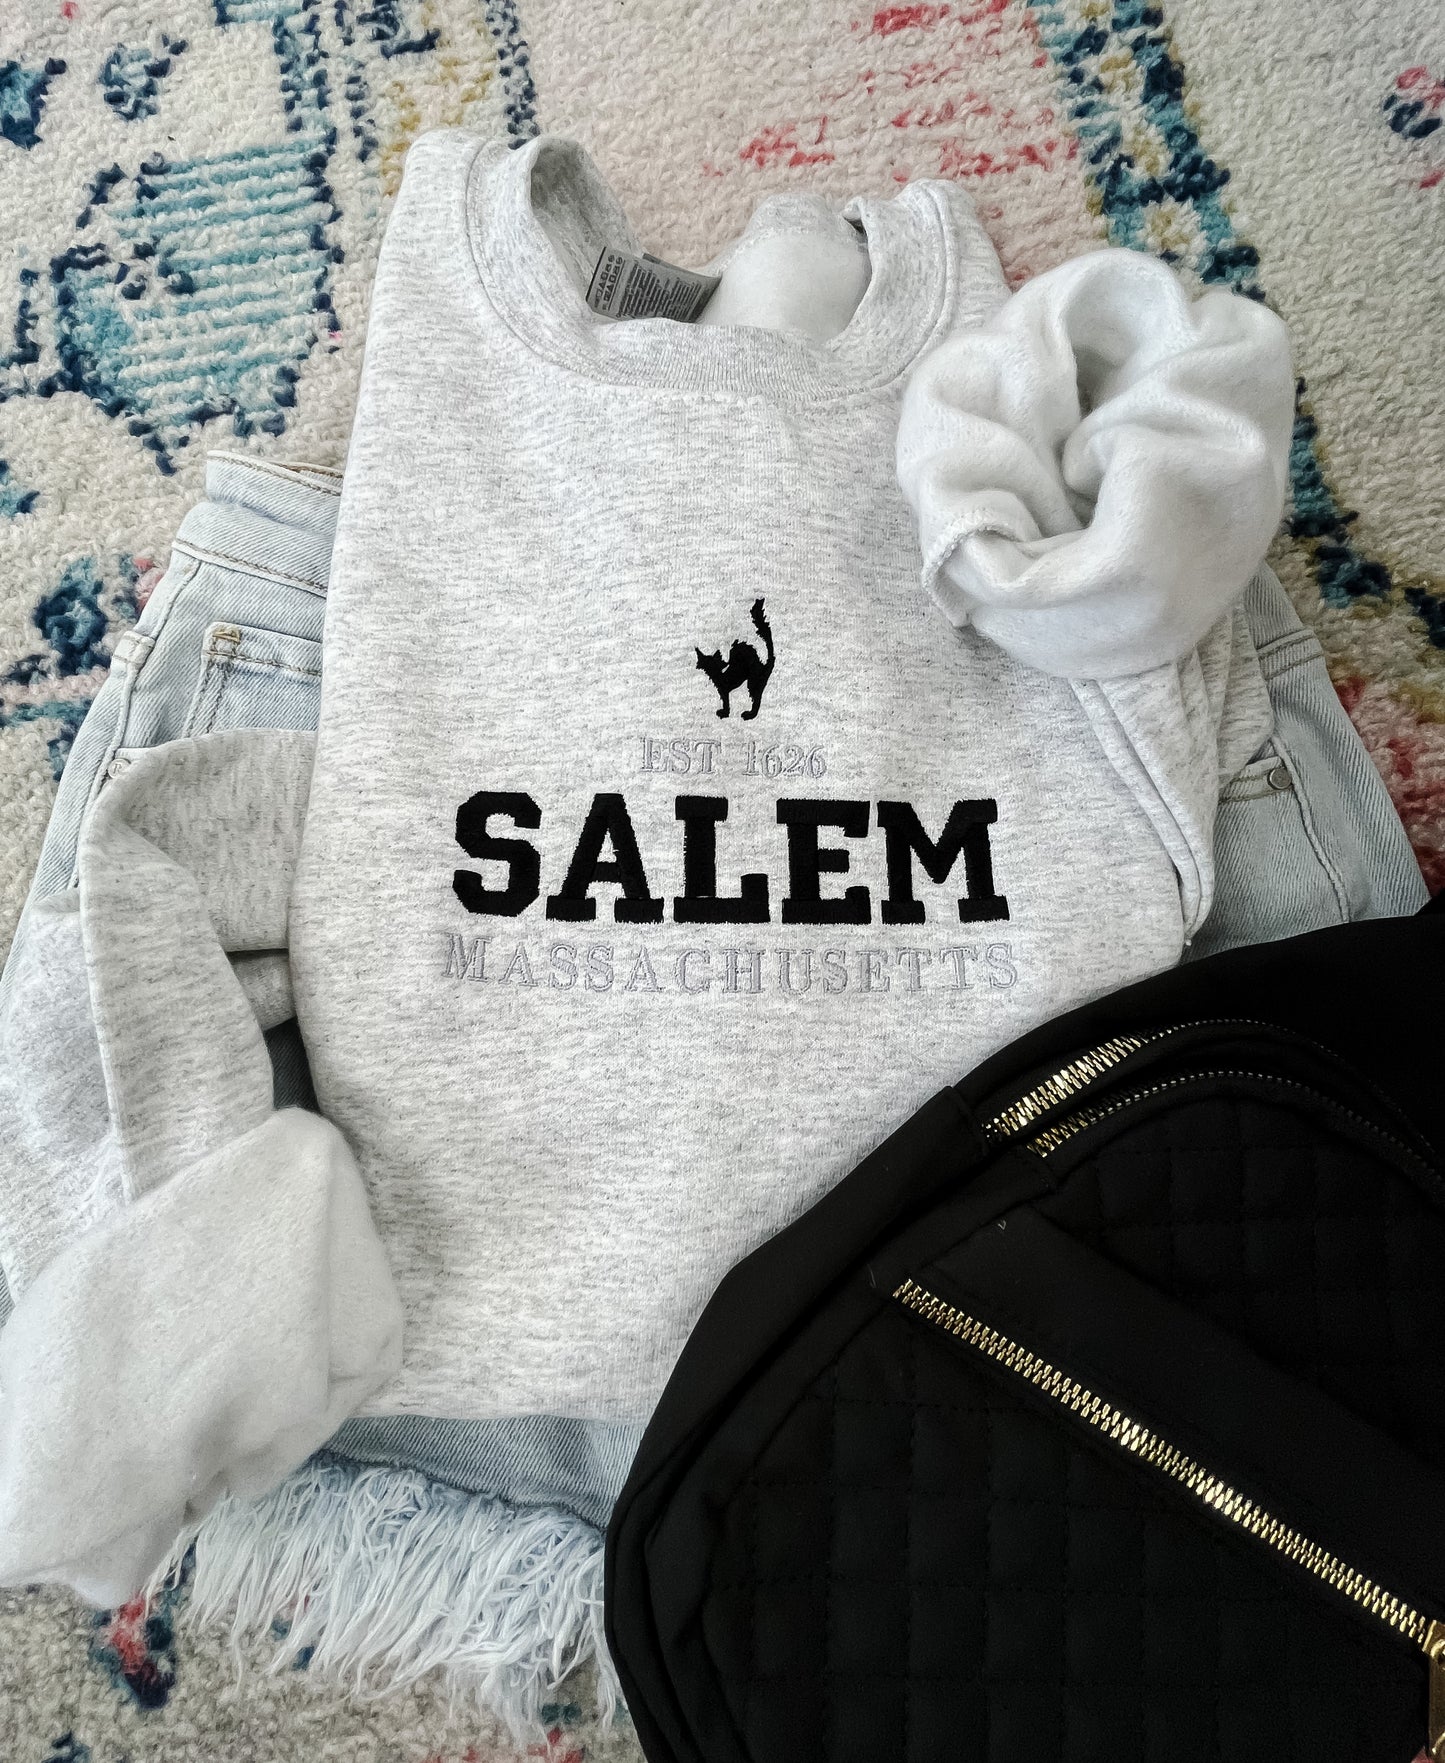 Salem Massachusetts Embroidered Sweatshirt